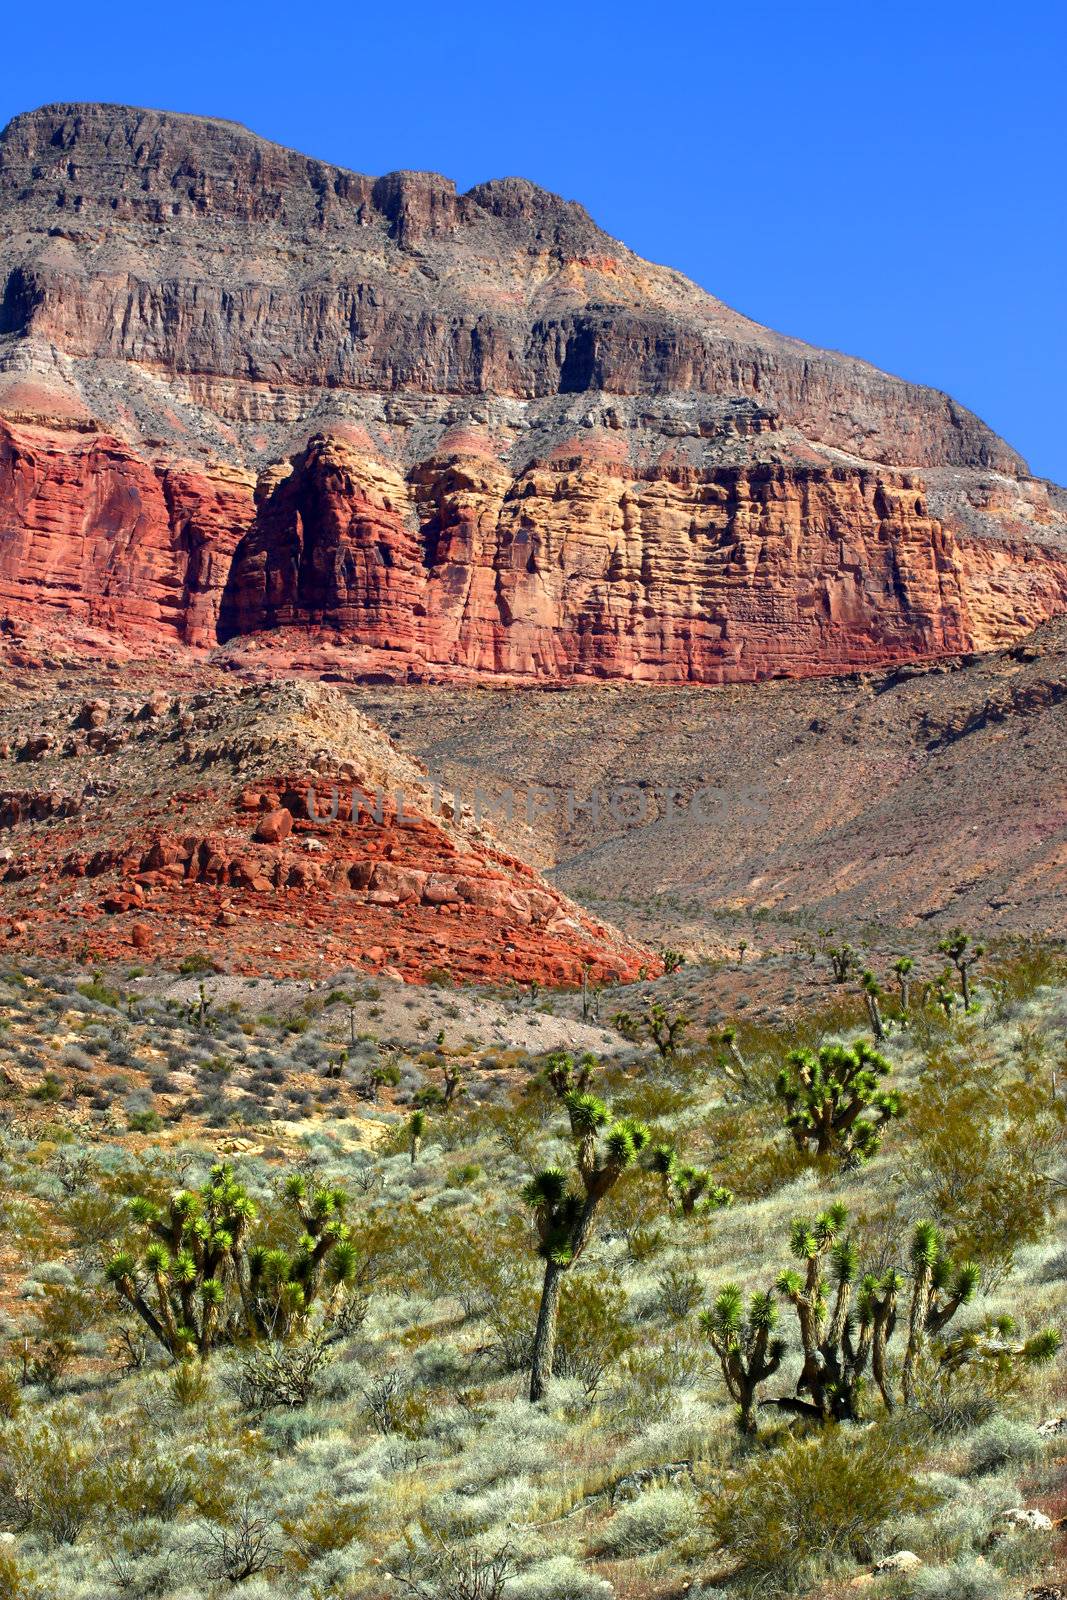 Landscape of the Beaver Dam Mountains Wilderness Area in the northwest corner of Arizona.